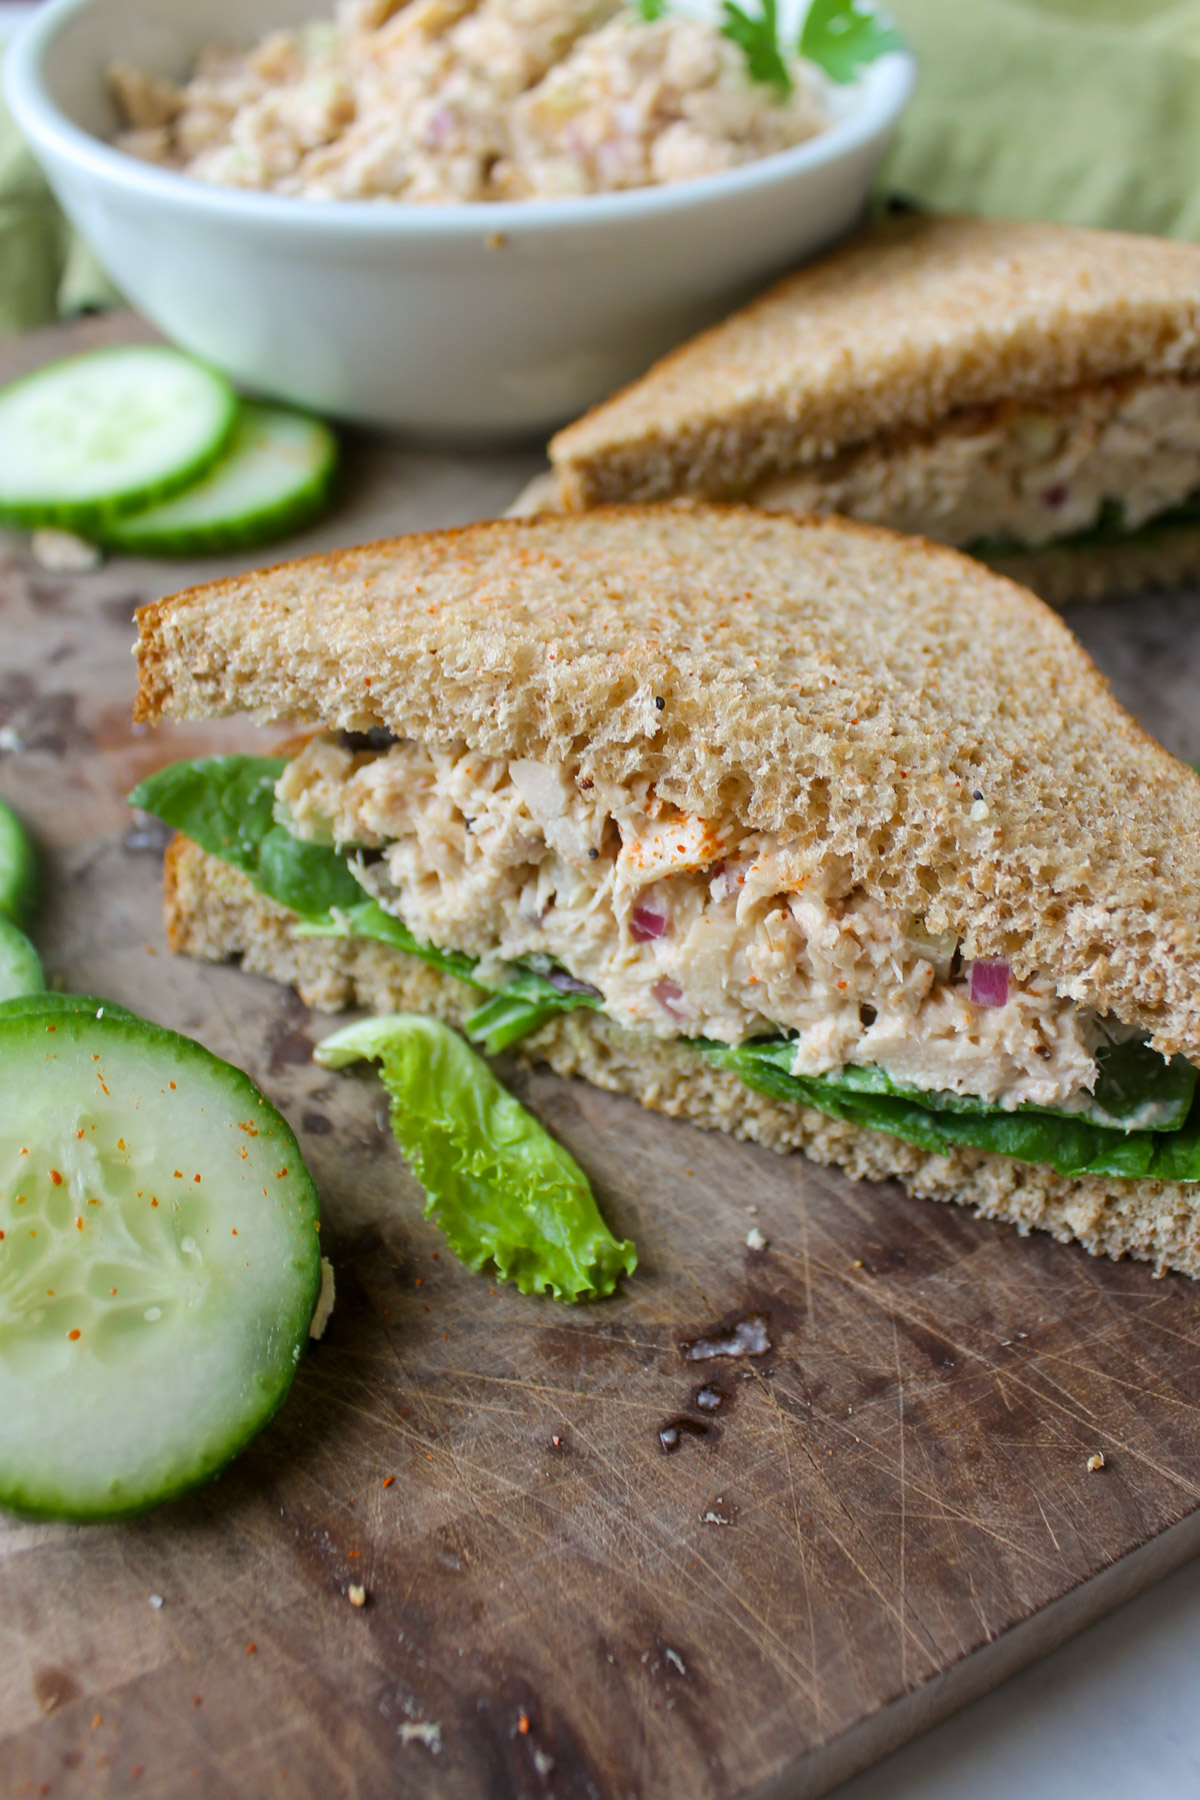 Tuna salad sandwiches on wheat bread with lettuce.